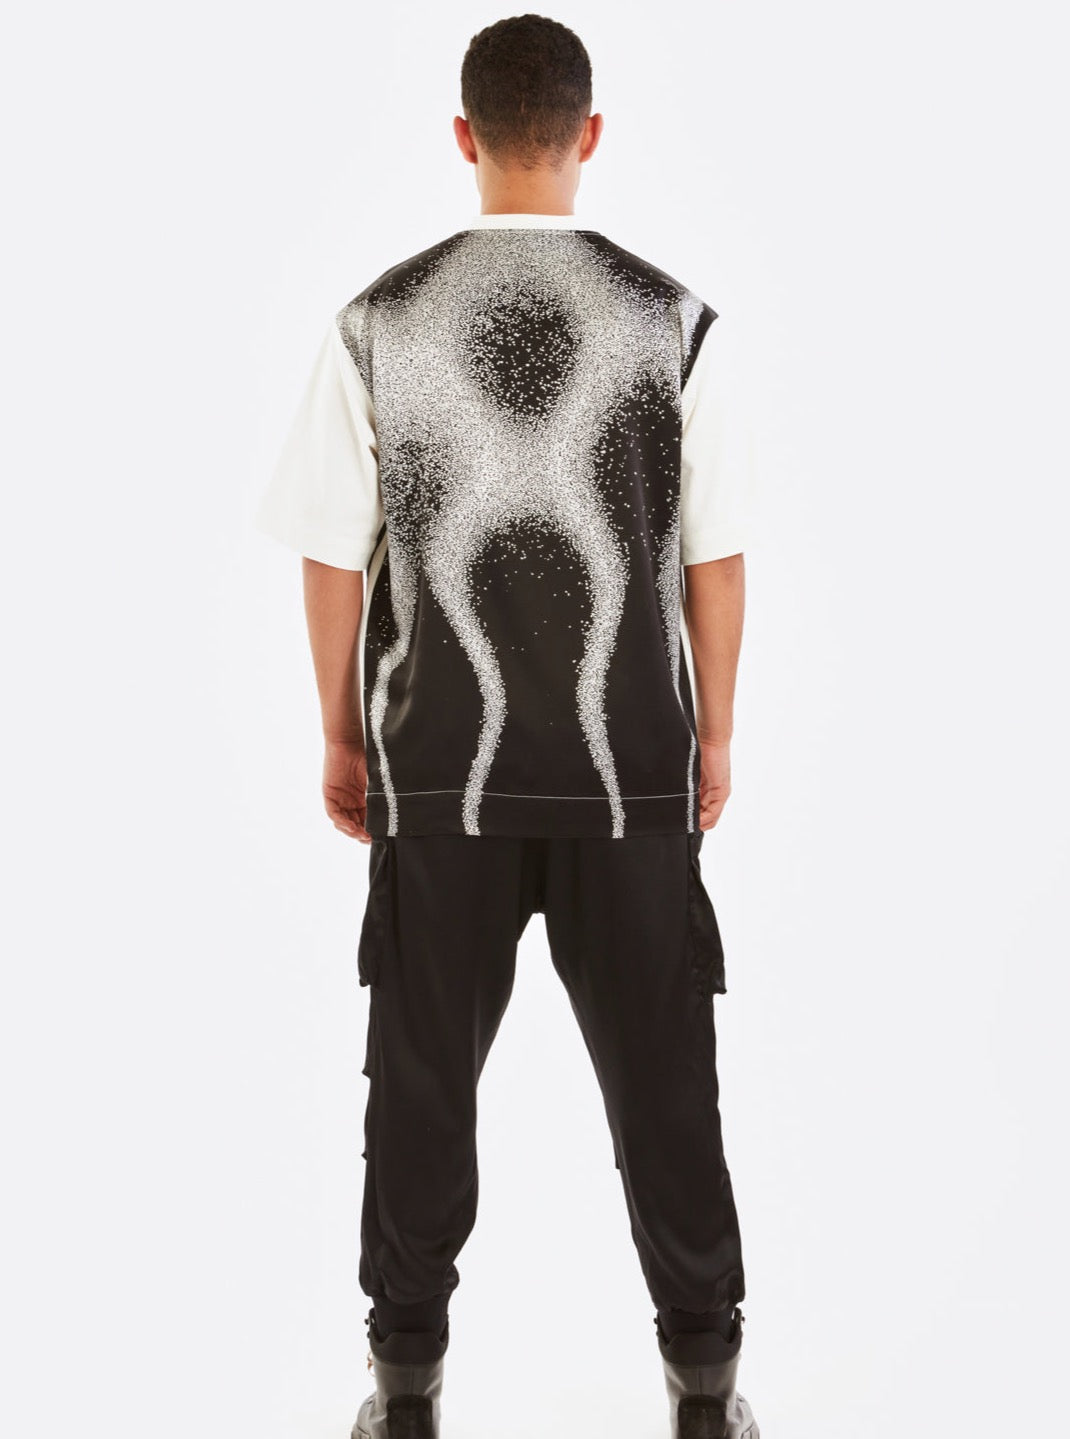 T-Shirt 994 Cymatics